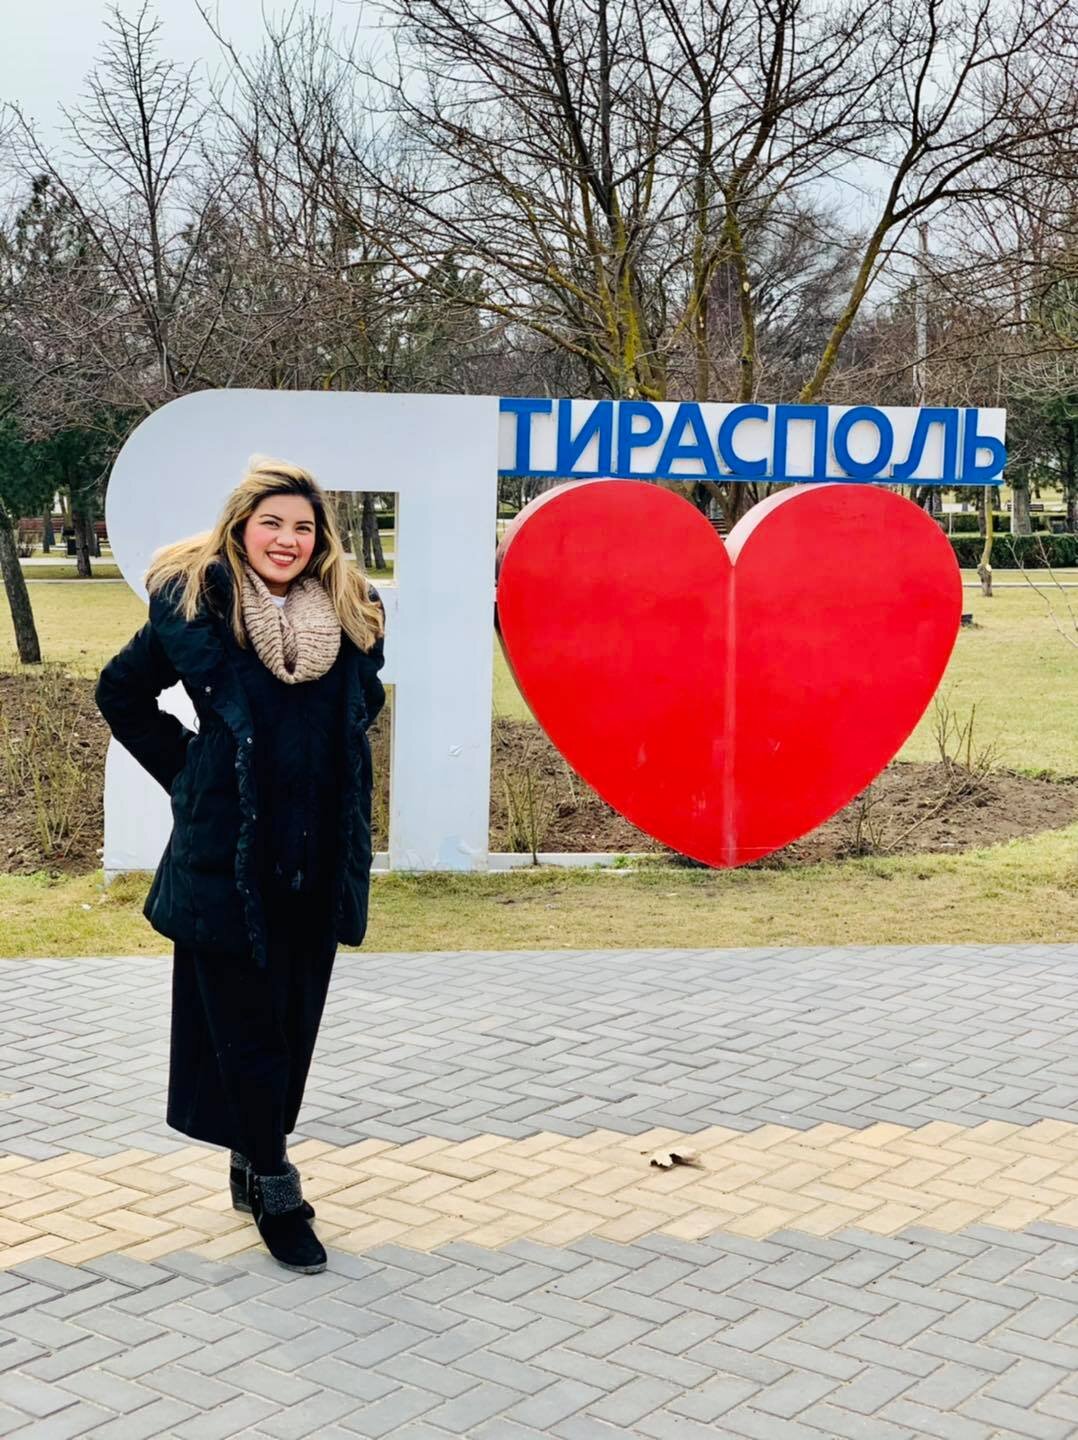 Our experience of Tiraspol, Transnistria11.jpg